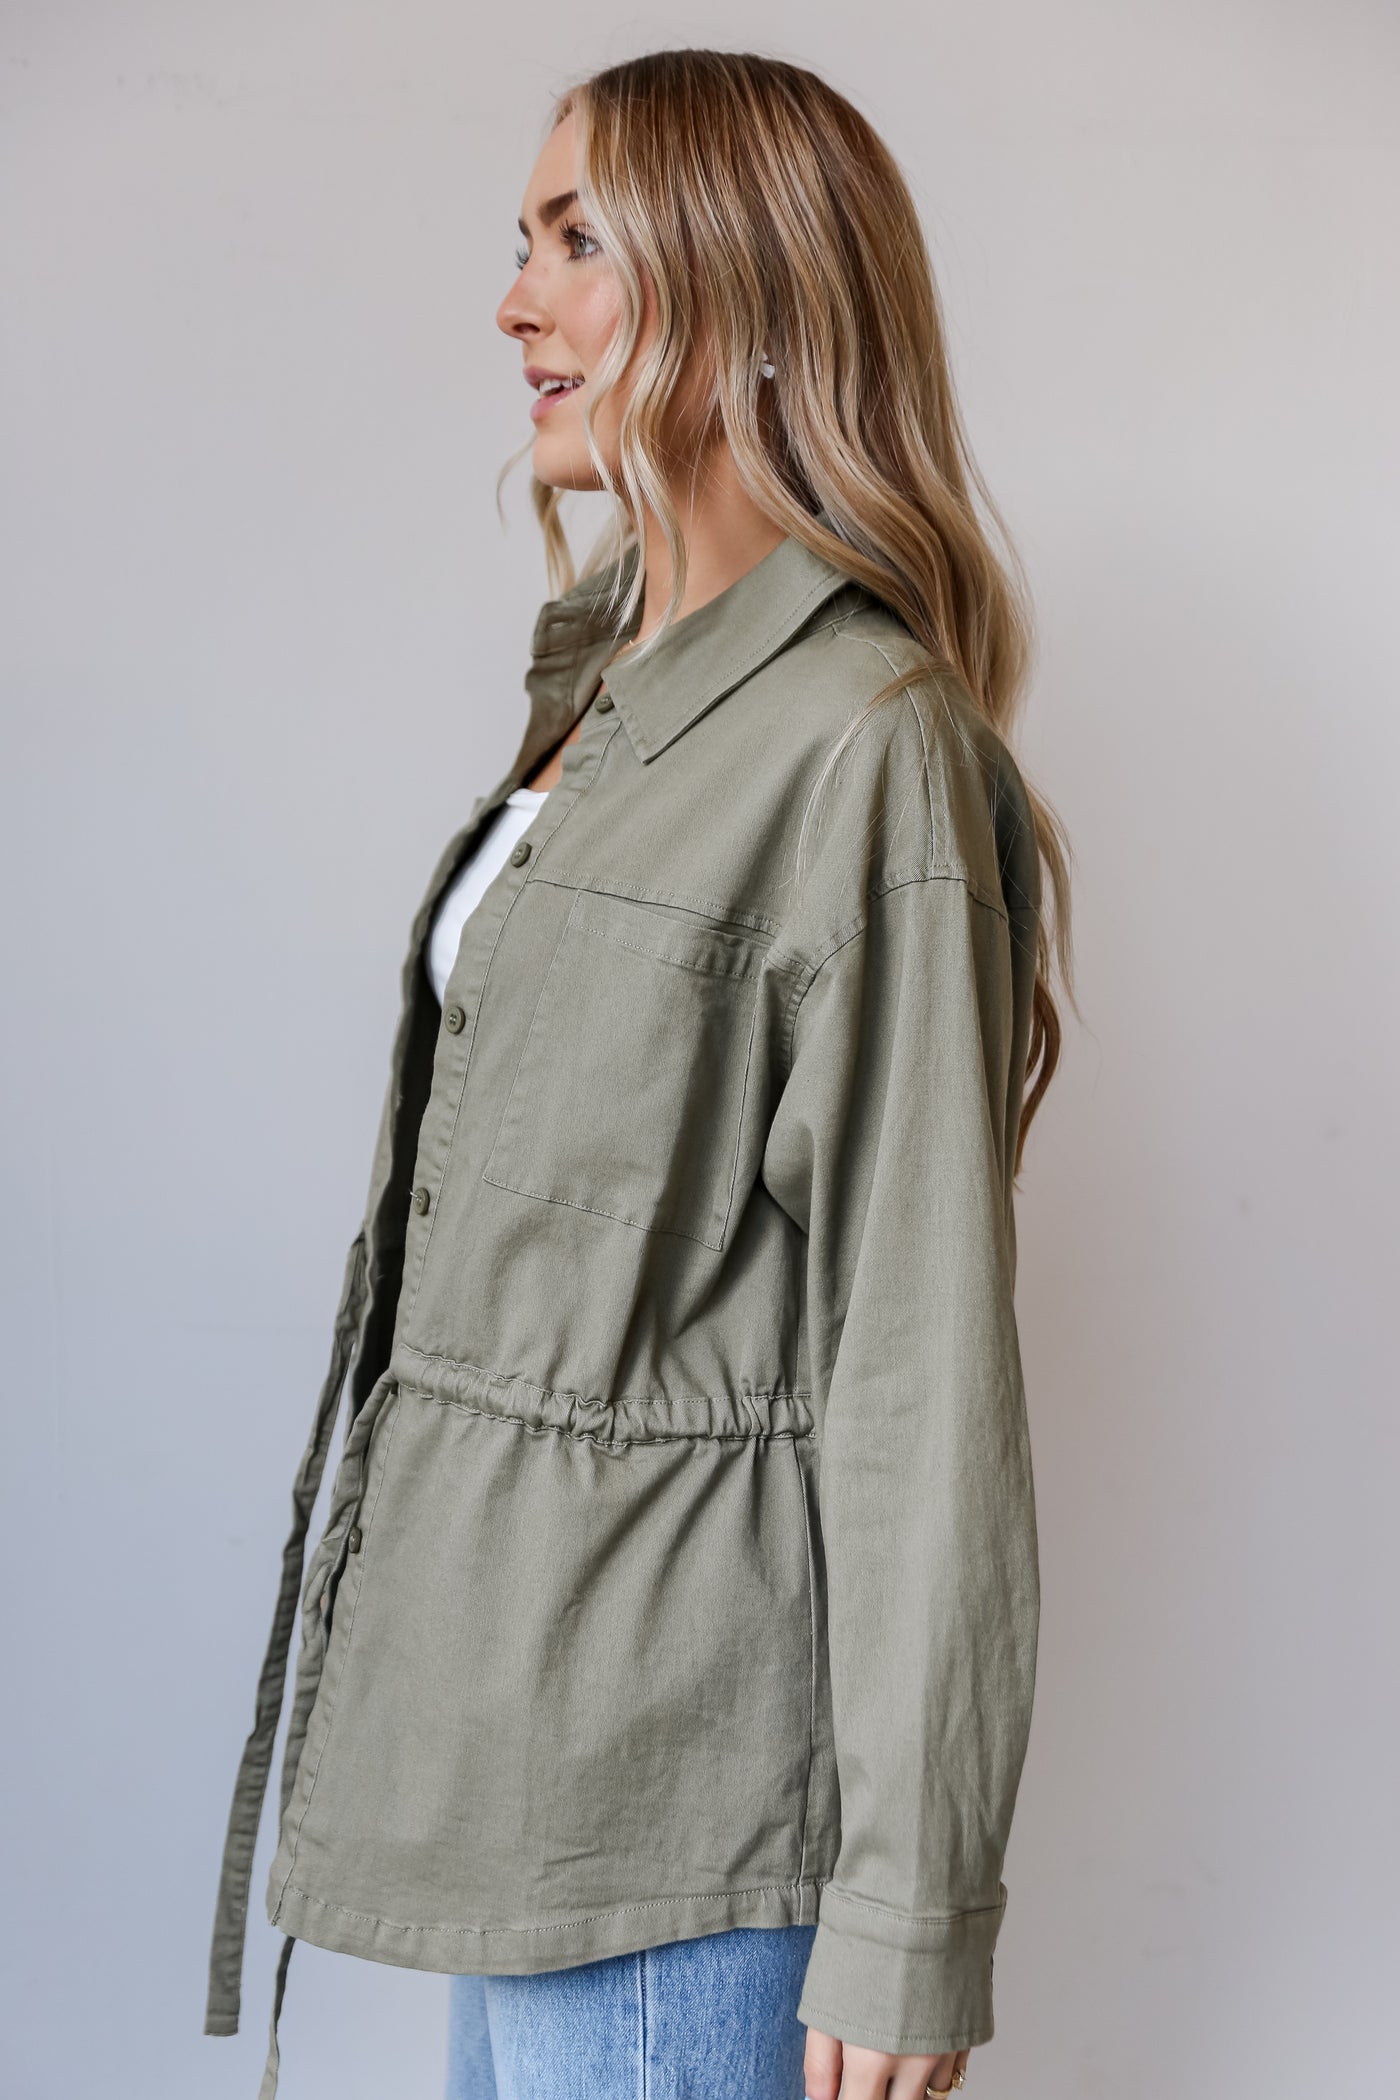 denim jackets for women